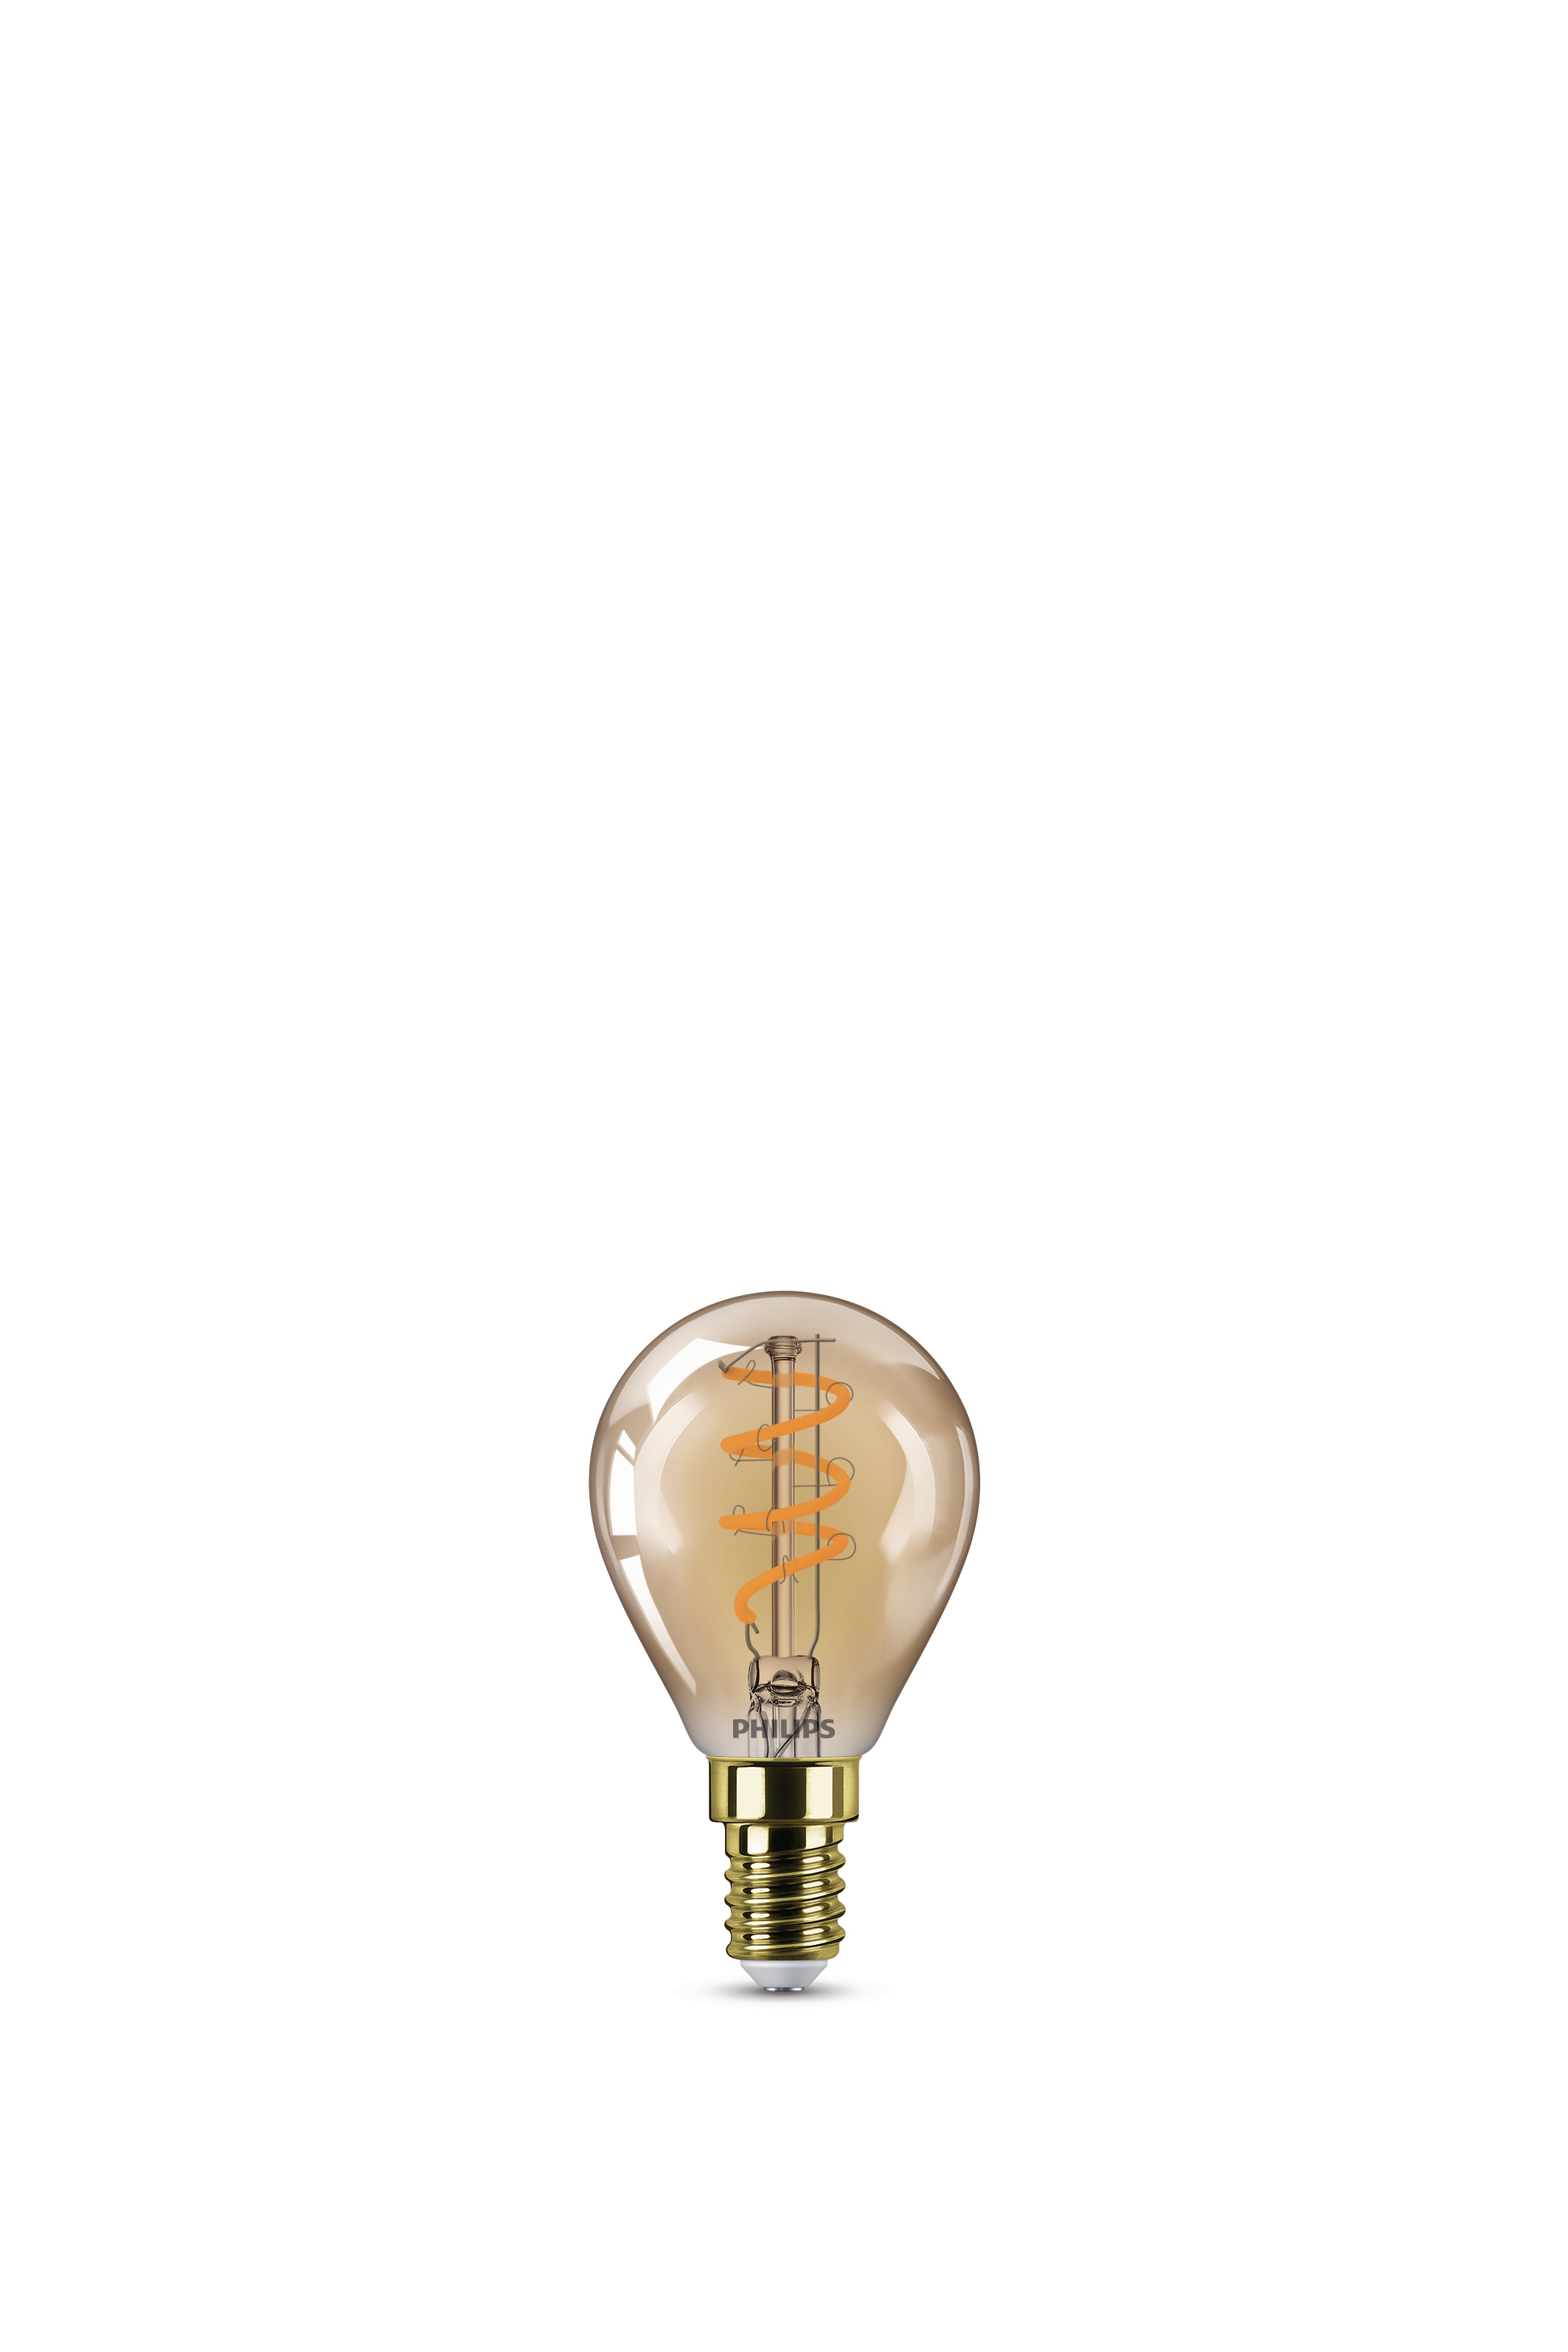 PHILIPS classic Vintage Tropfenlampe Lampe mit LED dimmbar E14 15W, Warmweiß Sockel